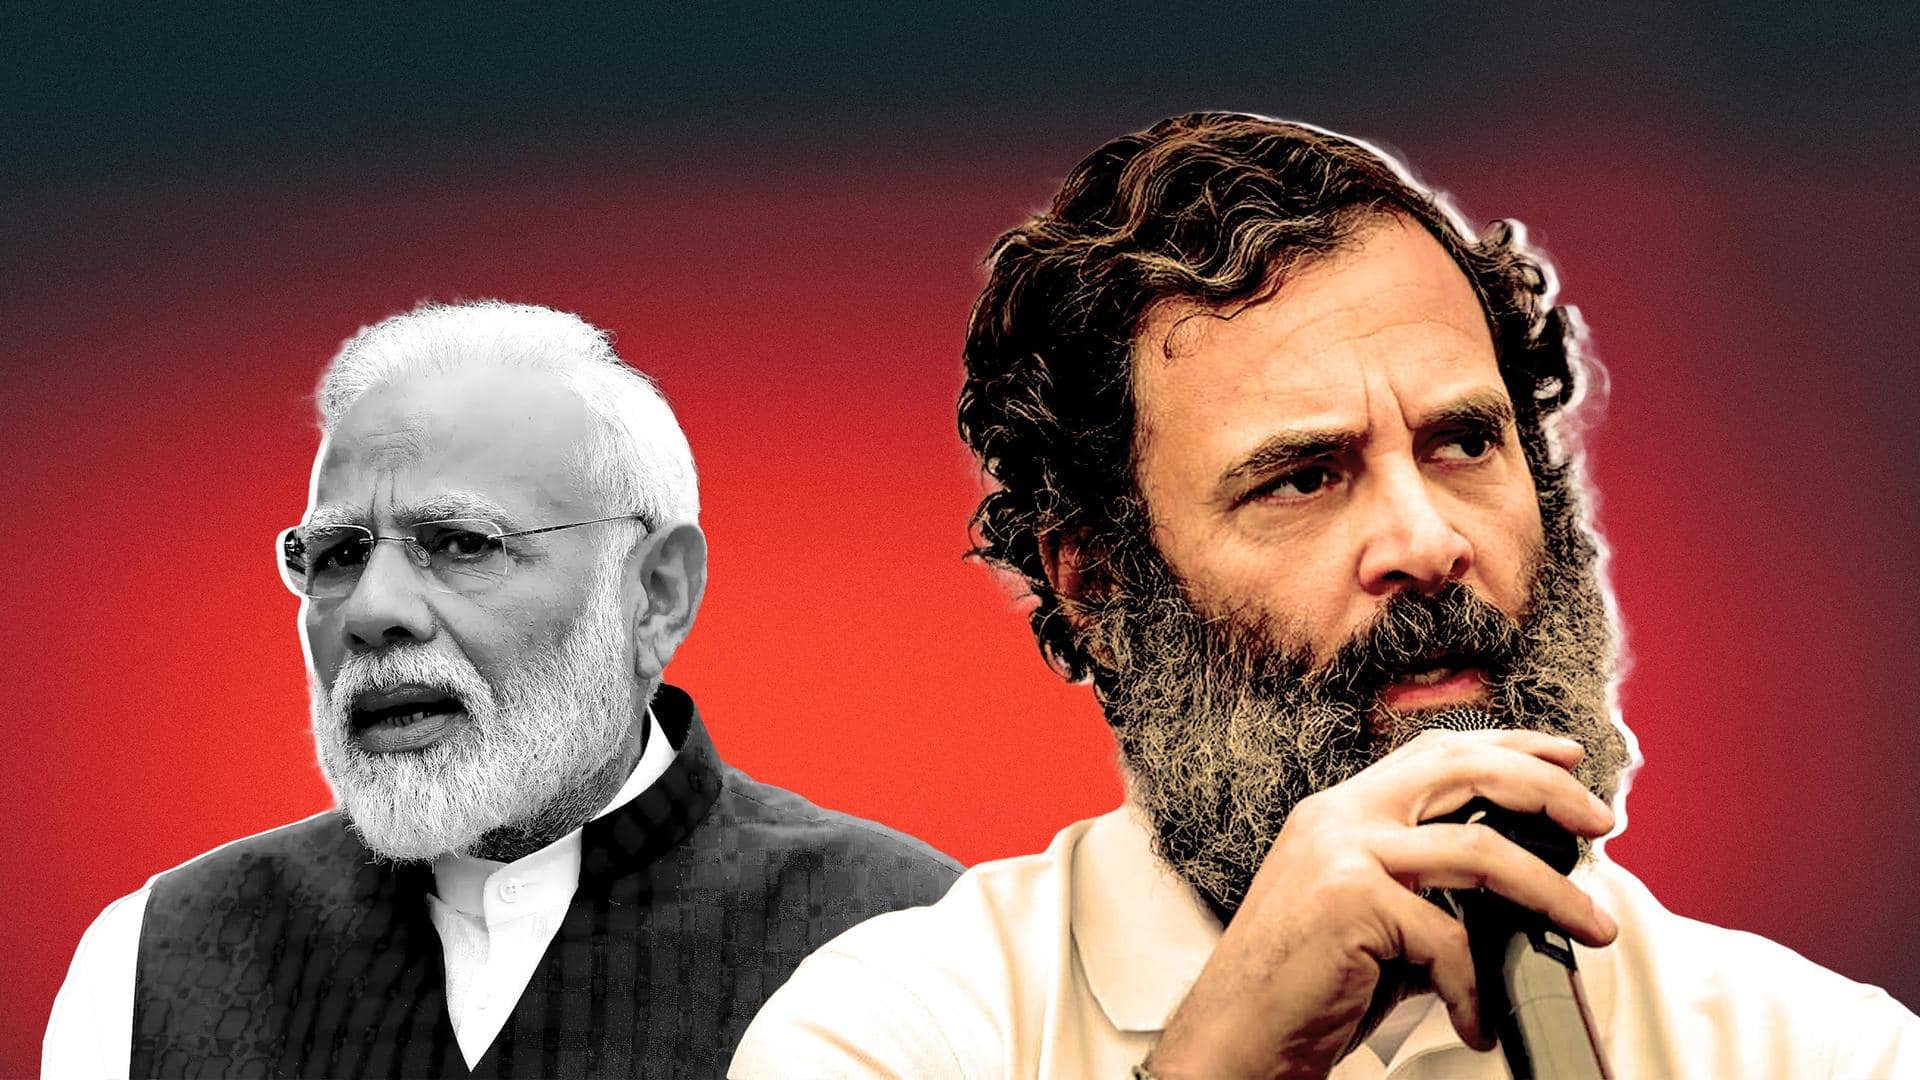 Easy to defeat Modi, alternative to 'fascism' needed: Rahul Gandhi 